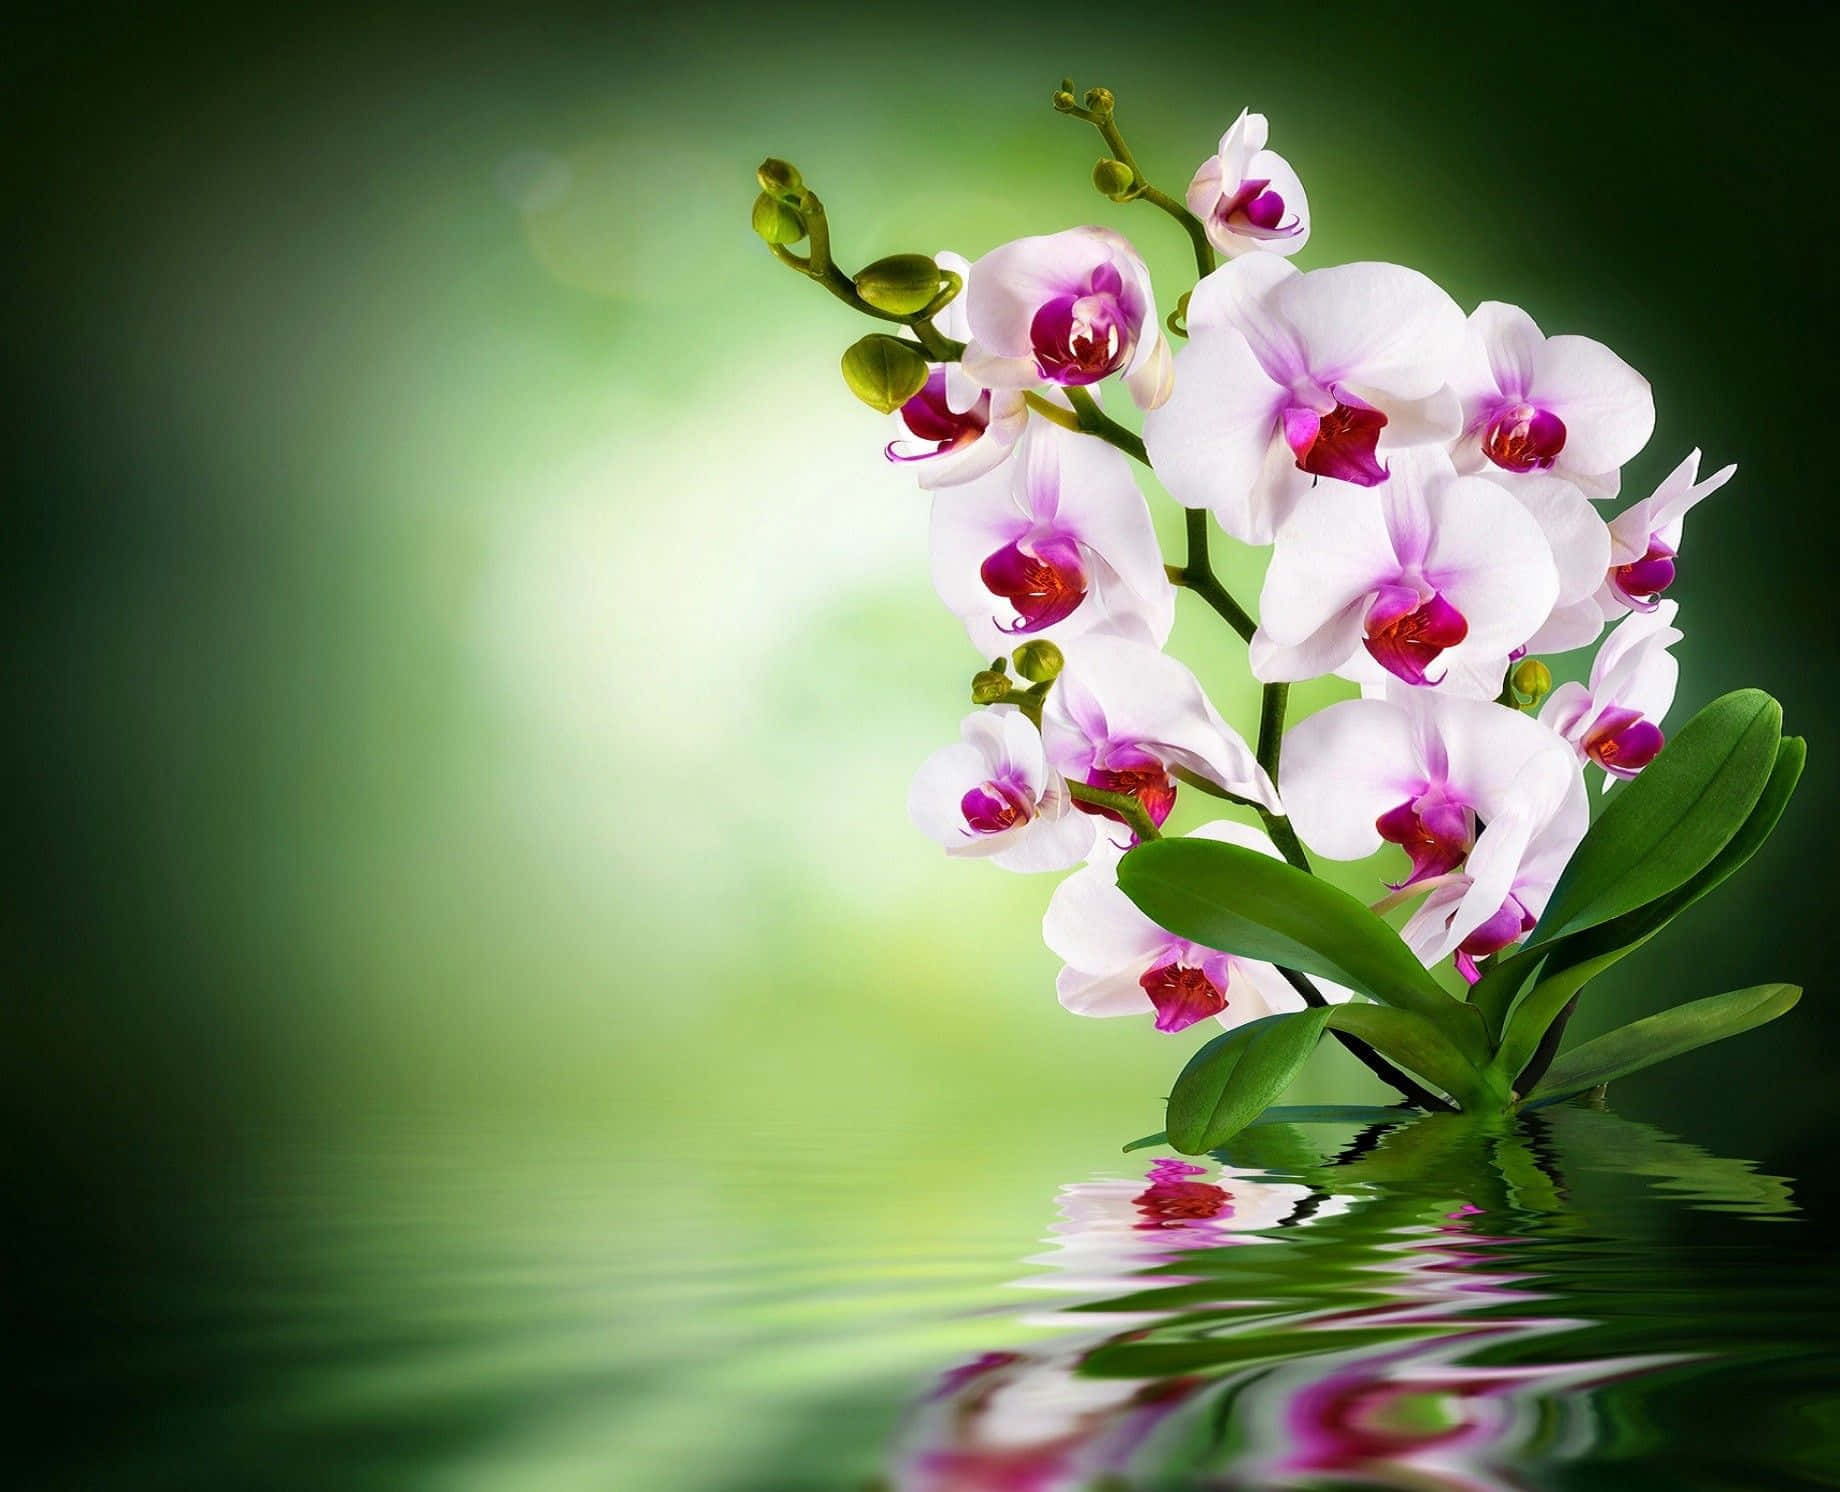 Elegant Orchid on a Minimalistic Background